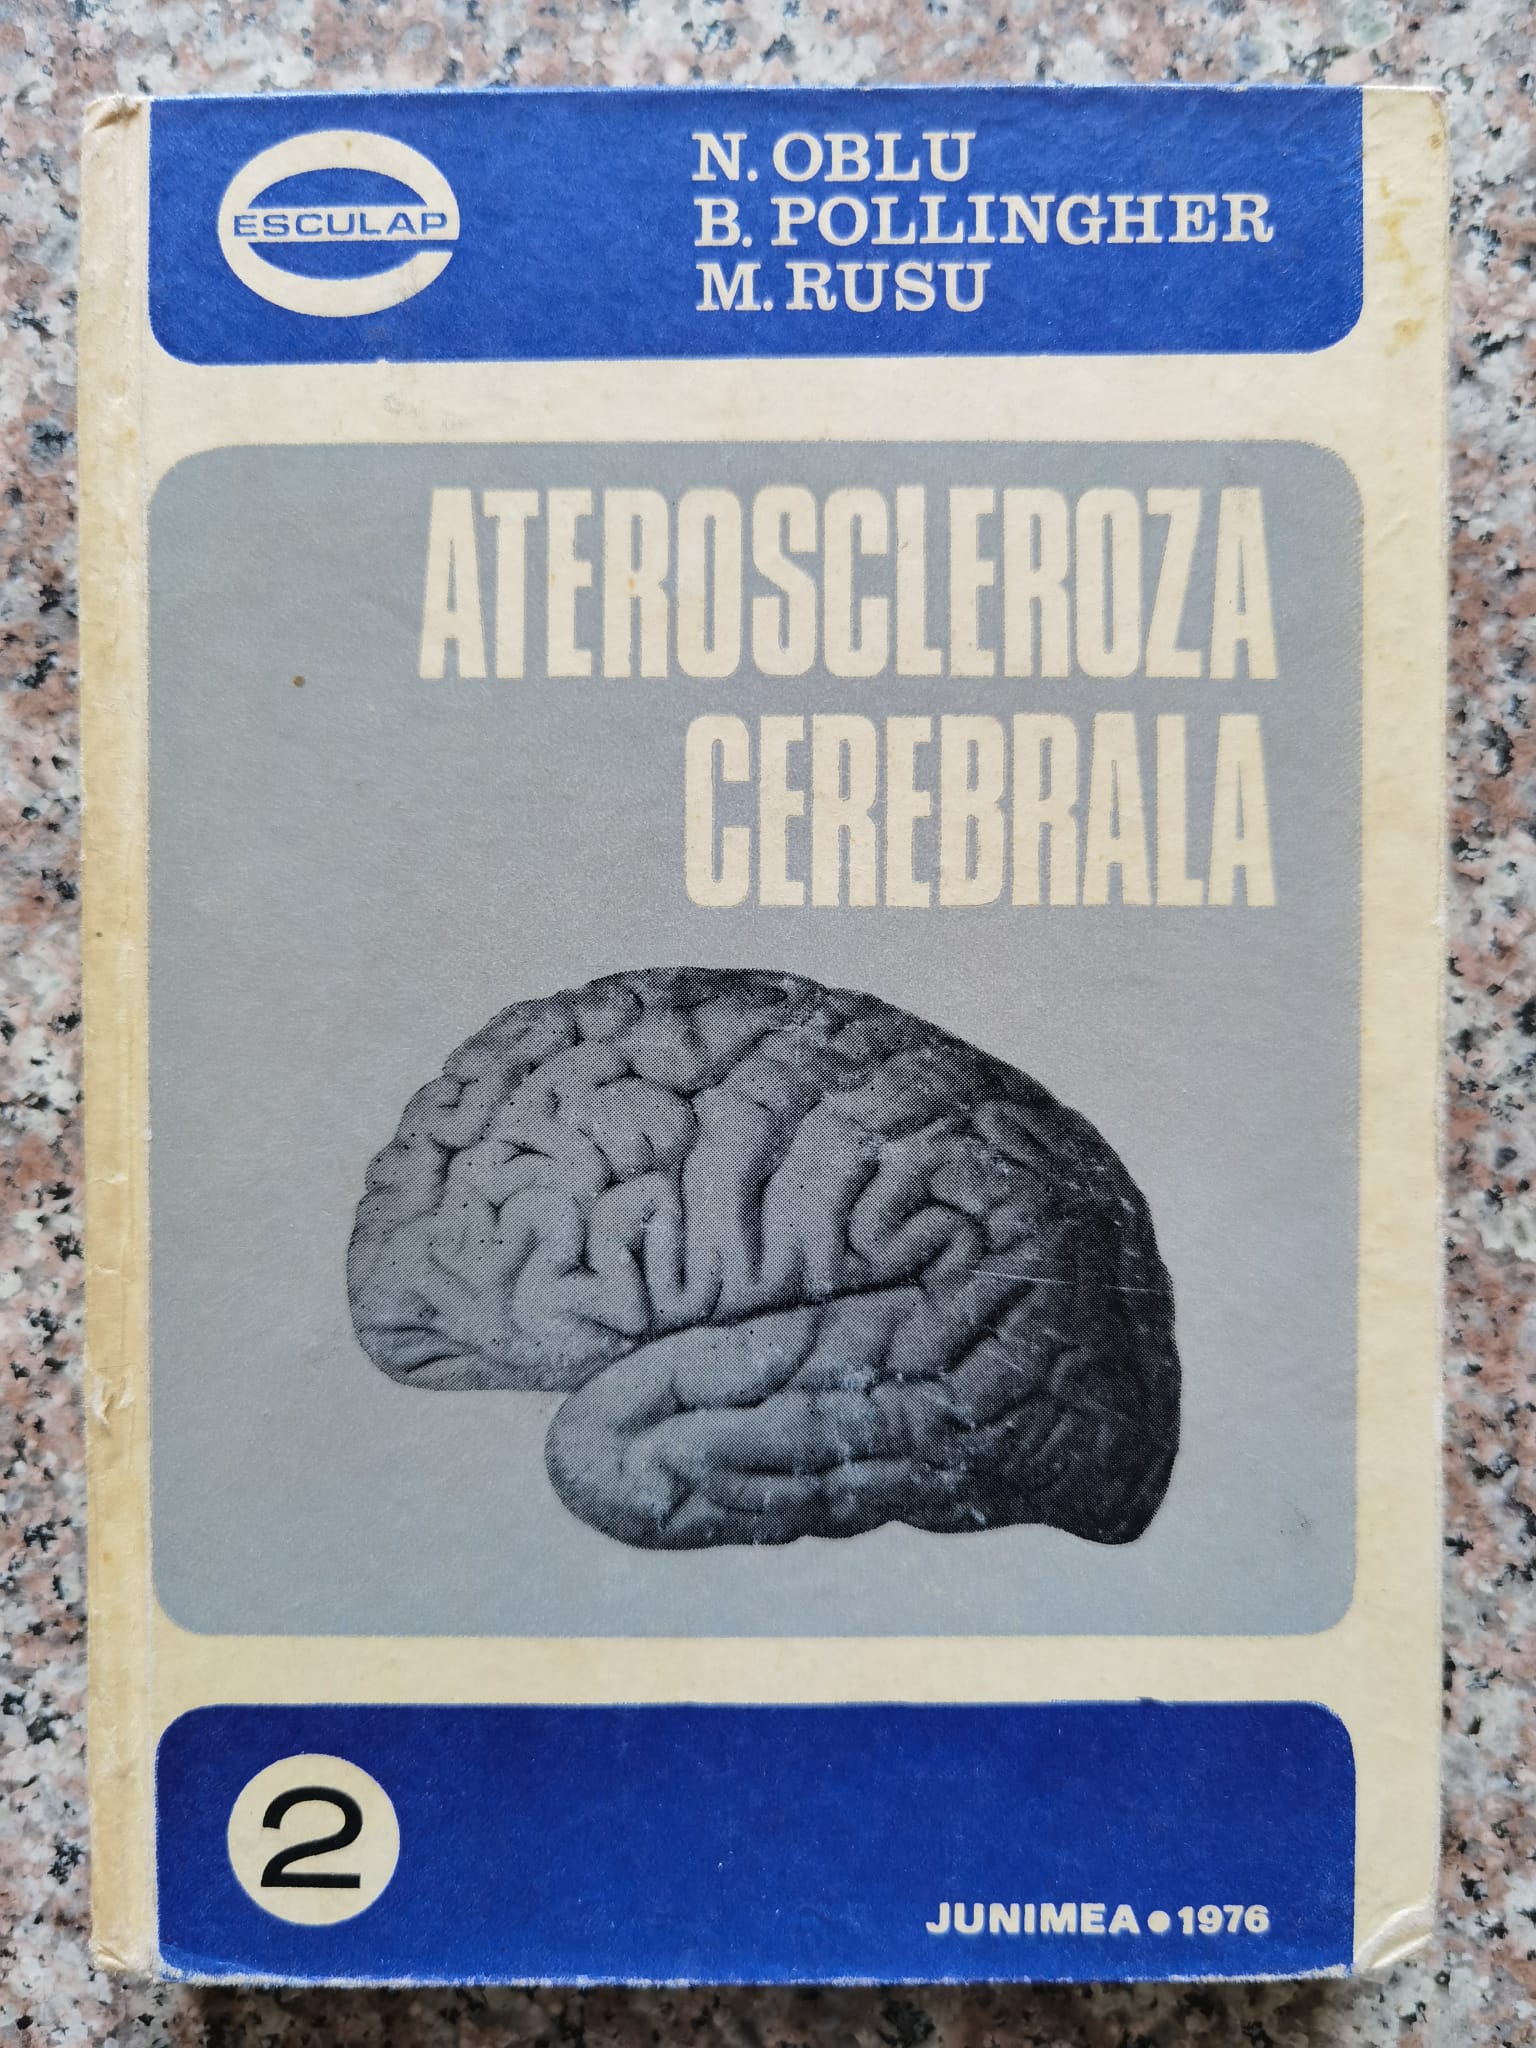 ateroscleroza cerebrala                                                                              n.oblu b.pollingher m.rusu                                                                          